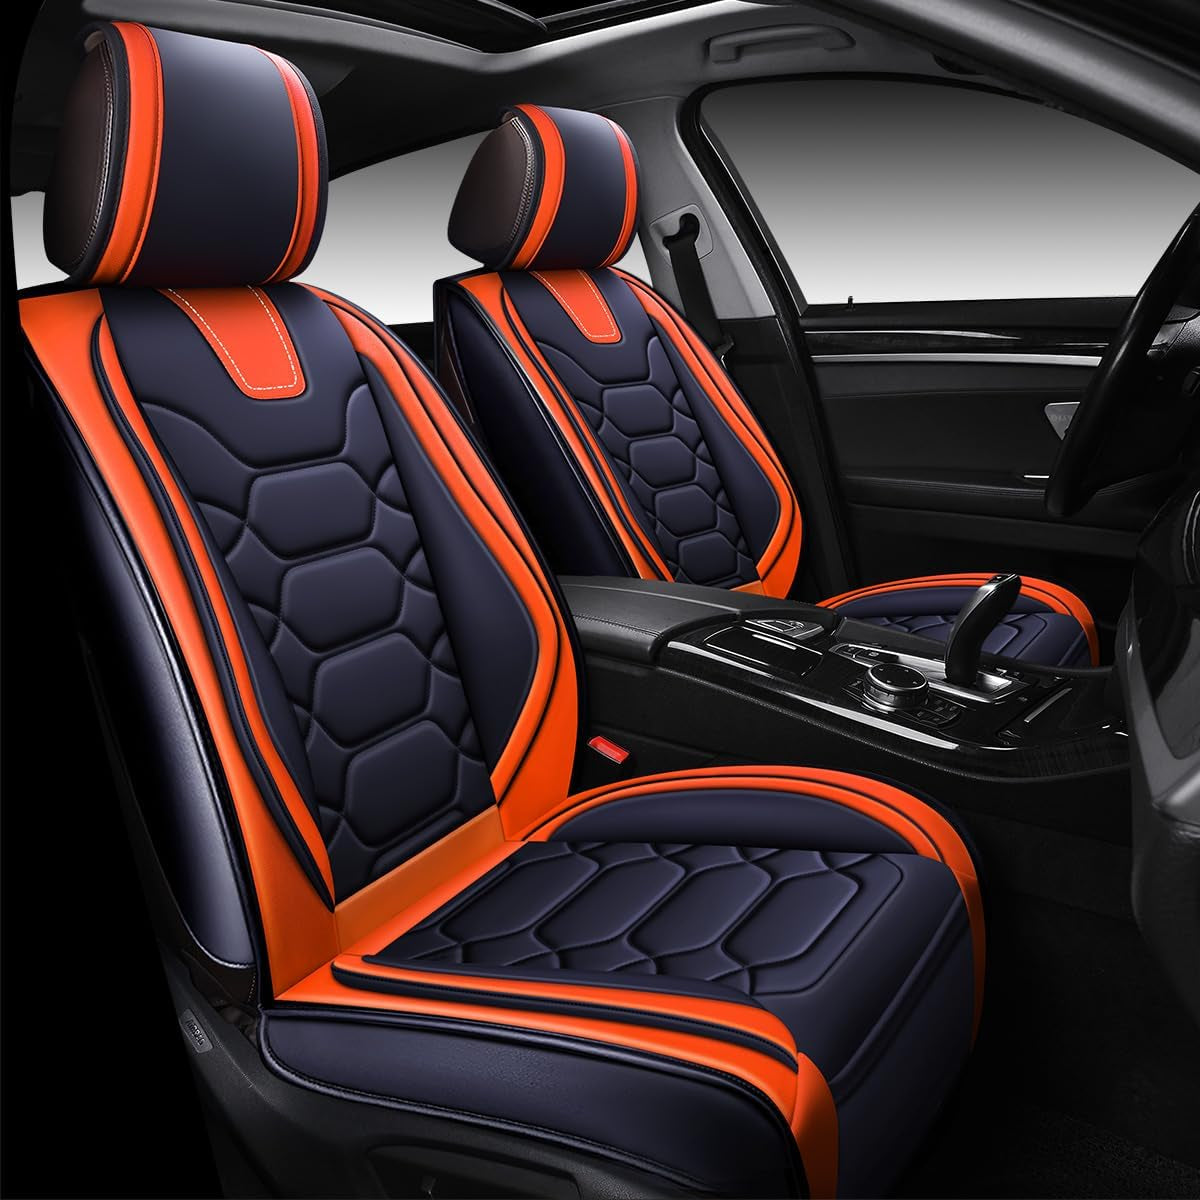 Car Seat Covers Premium Waterproof Faux Leather Cushion Universal Accessories Fit SUV Truck Sedan Automotive Vehicle Auto Interior Protector Full Set (OS-004 Orange)